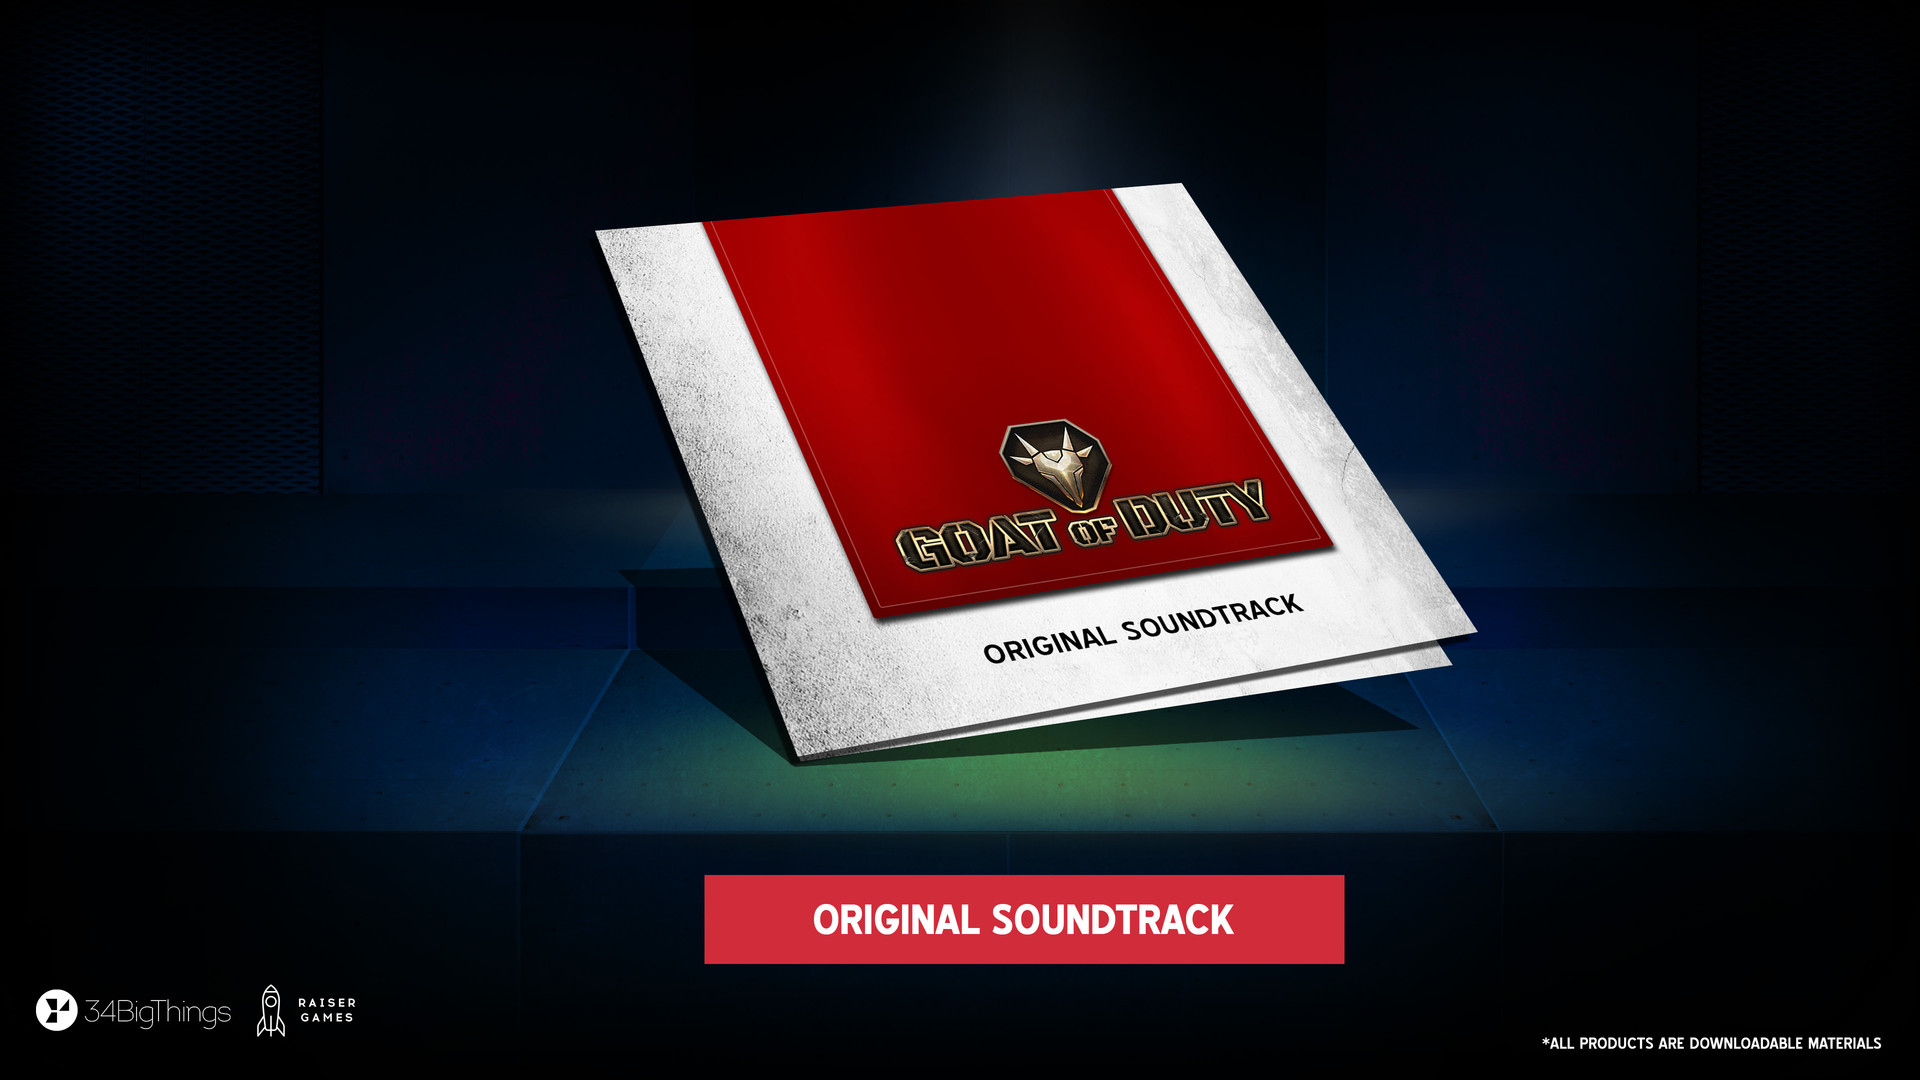 Goat of Duty Original Soundtrack Featured Screenshot #1